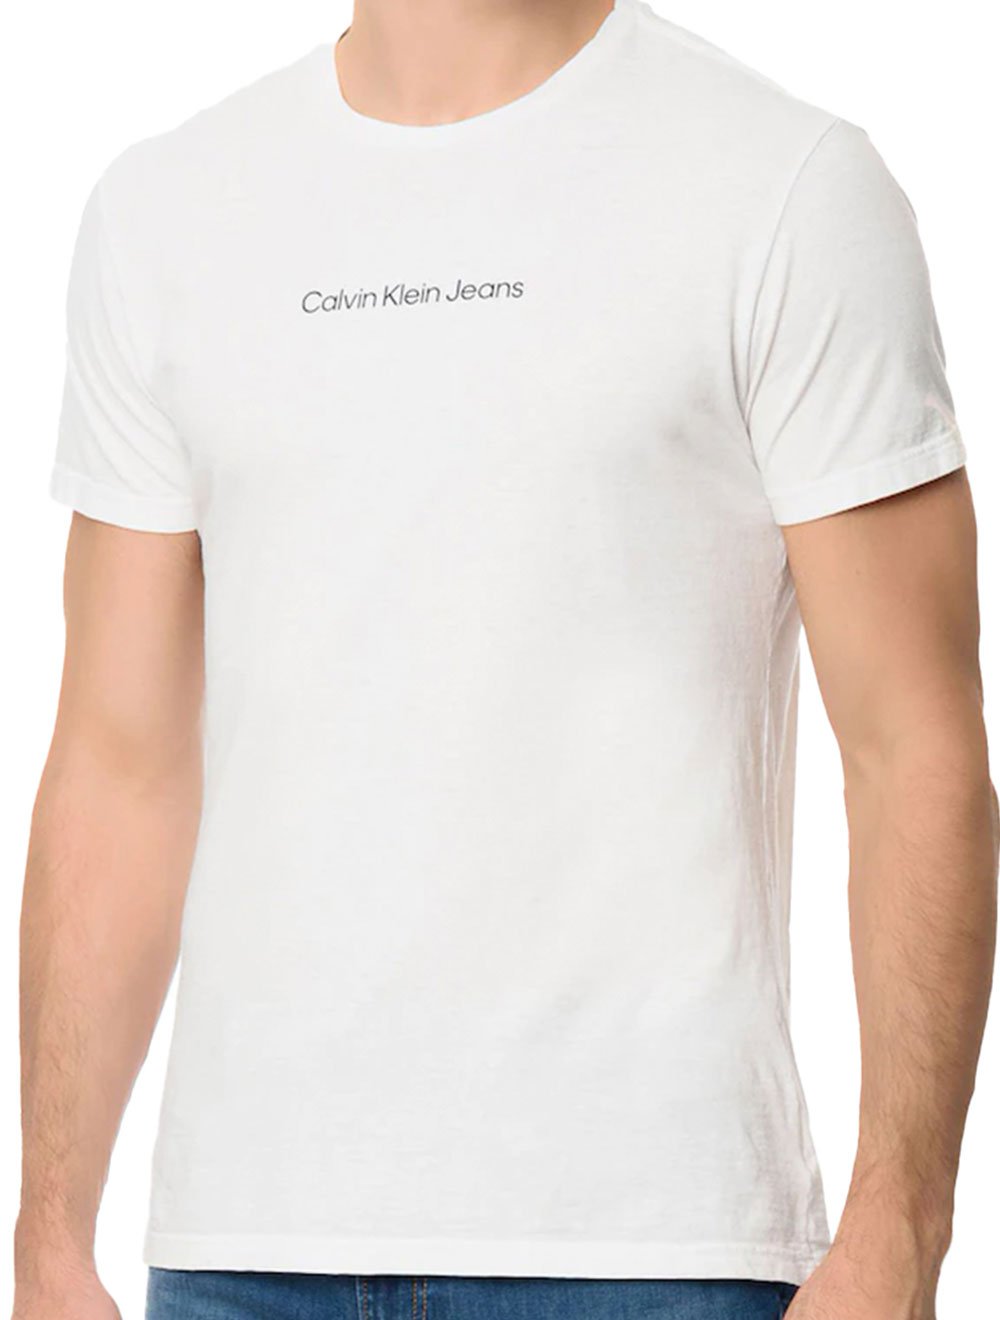 Camiseta Calvin Klein Jeans Masculina Institutional New Logo Branca